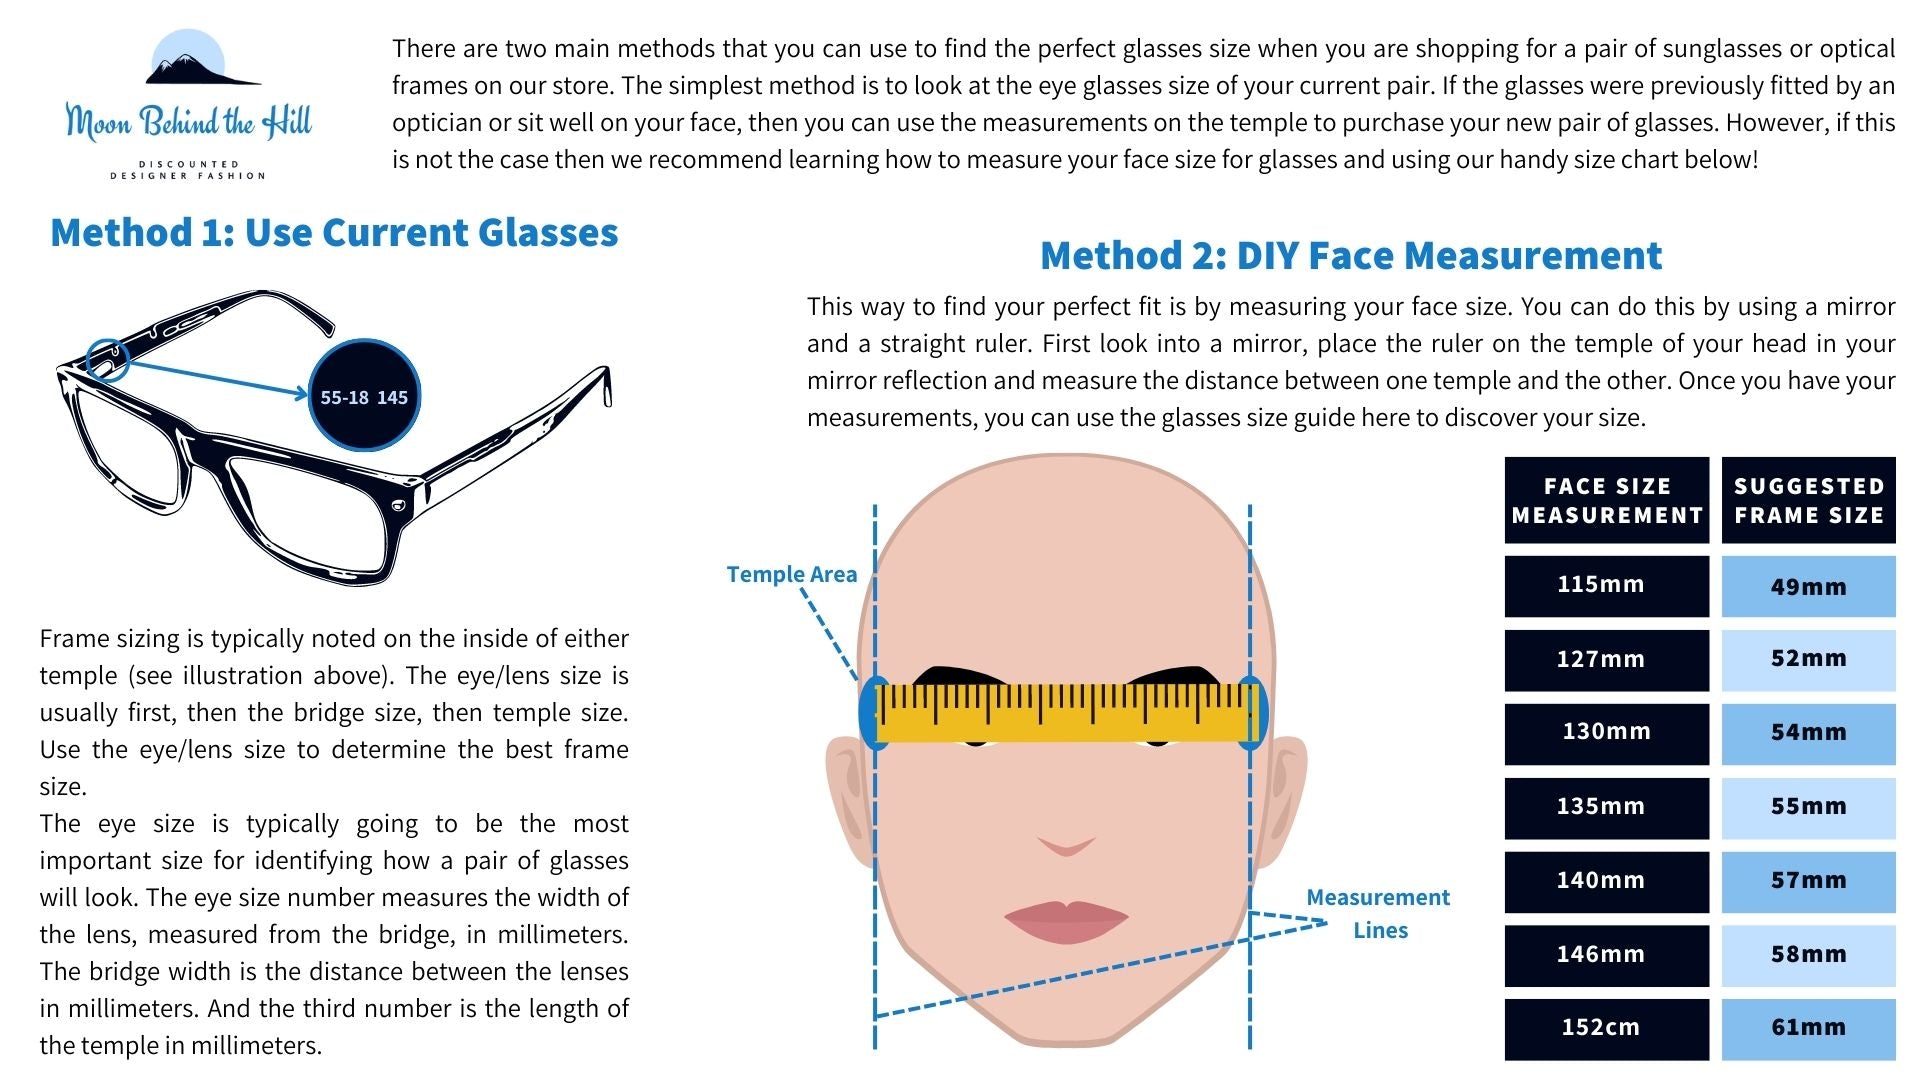 Sunglasses & Optical Frames Size Guide